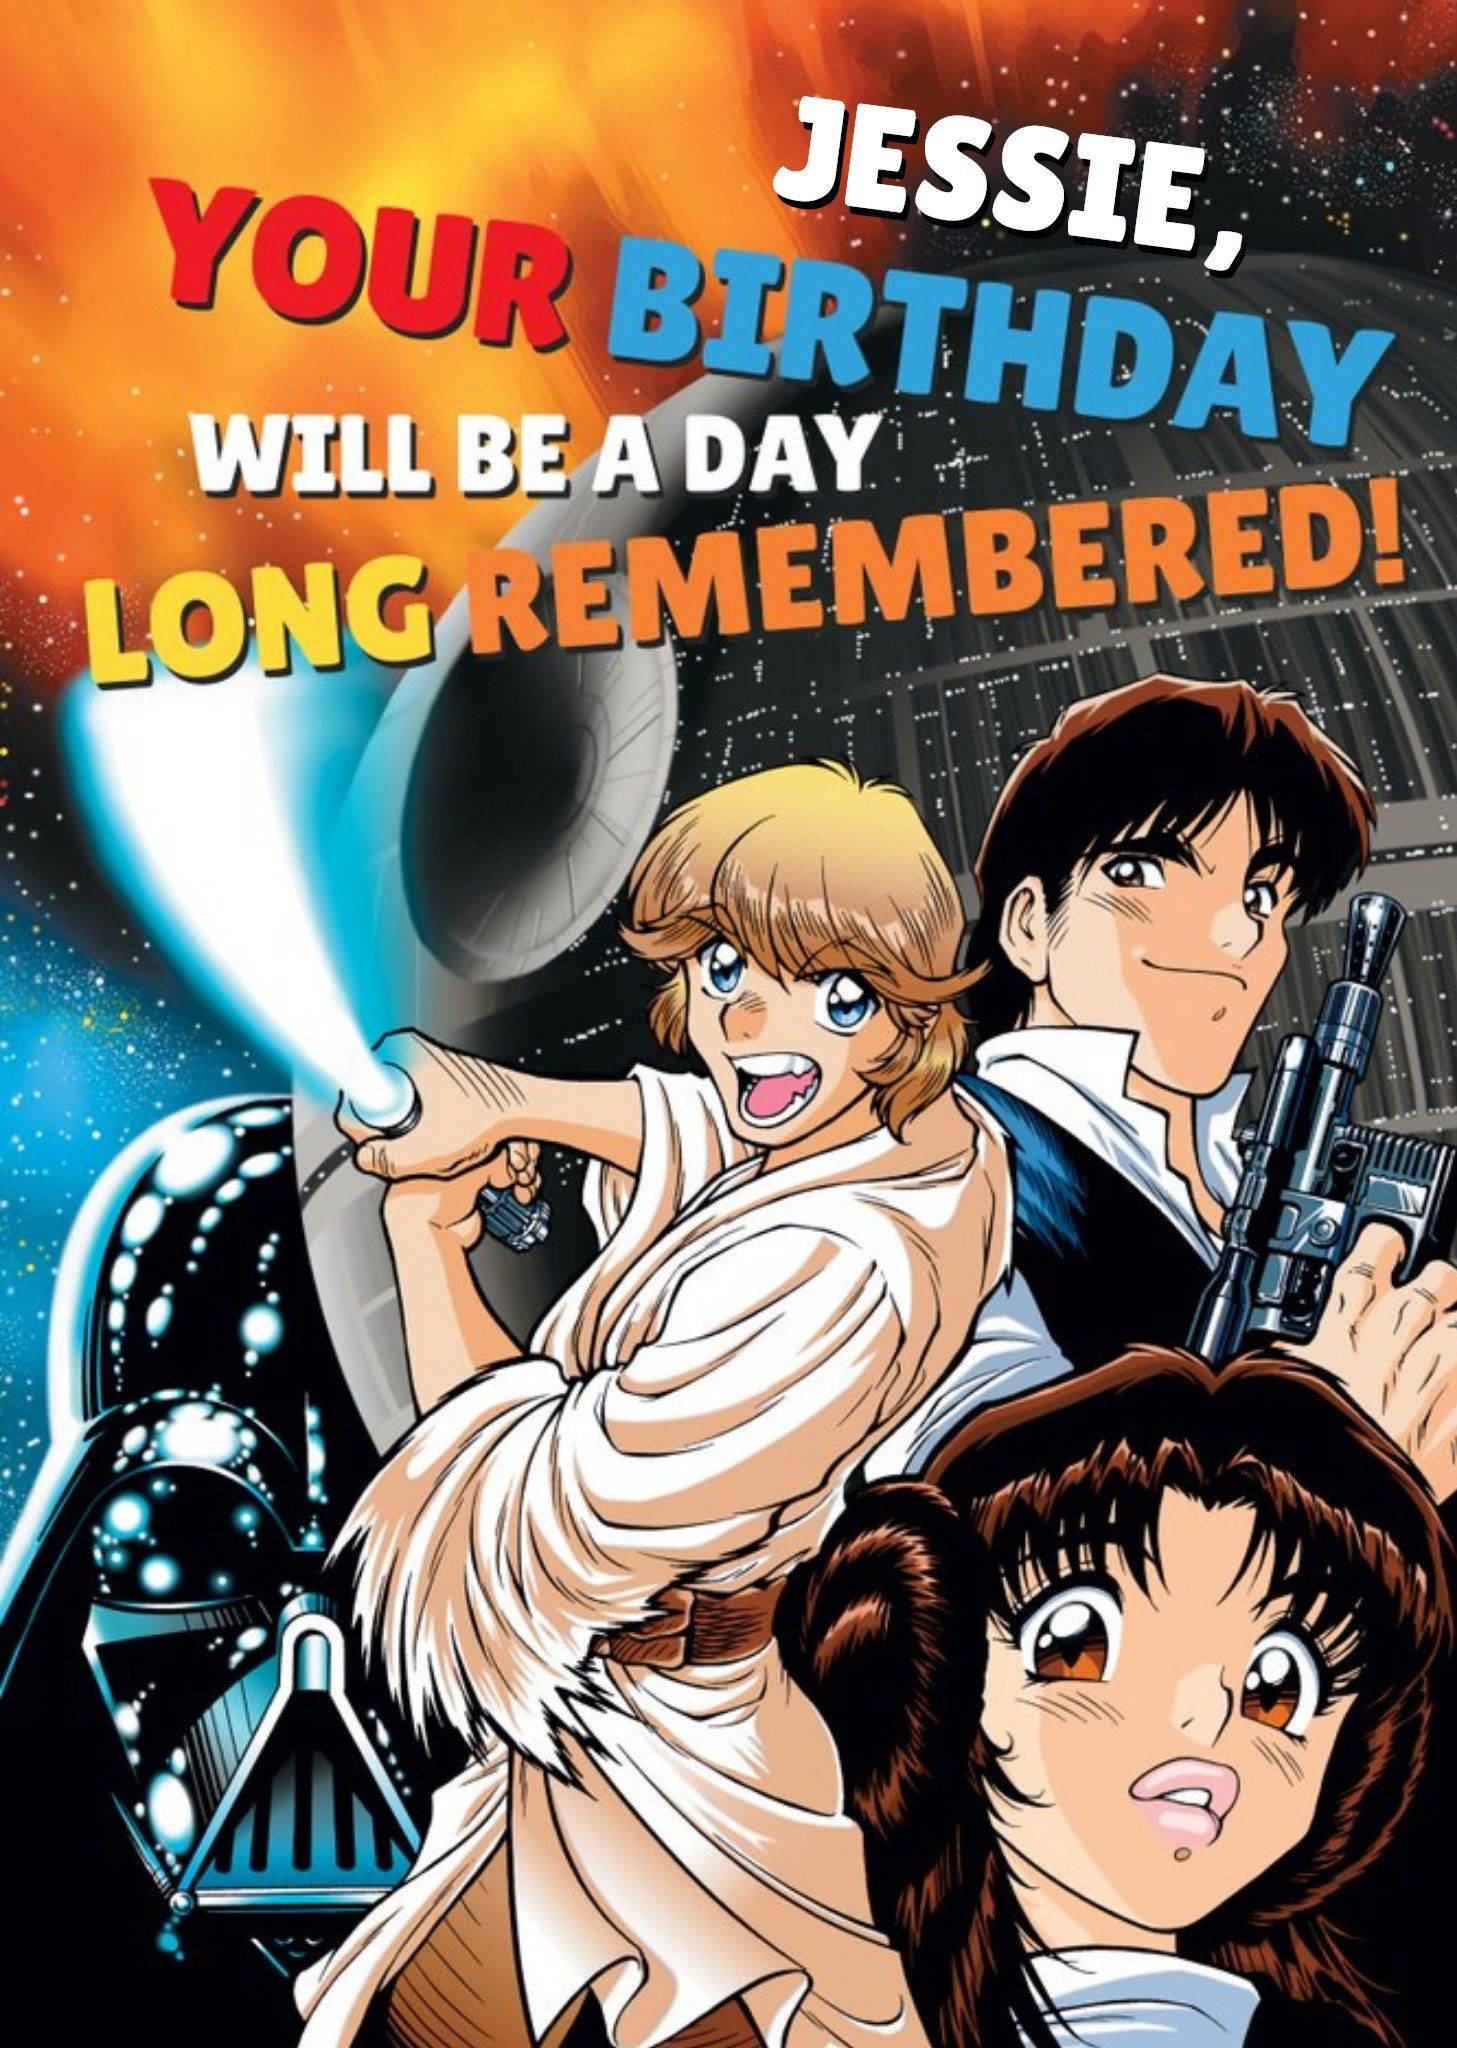 Manga Star Wars Illustrated A Day Long Remembered Birthday Card Ecard